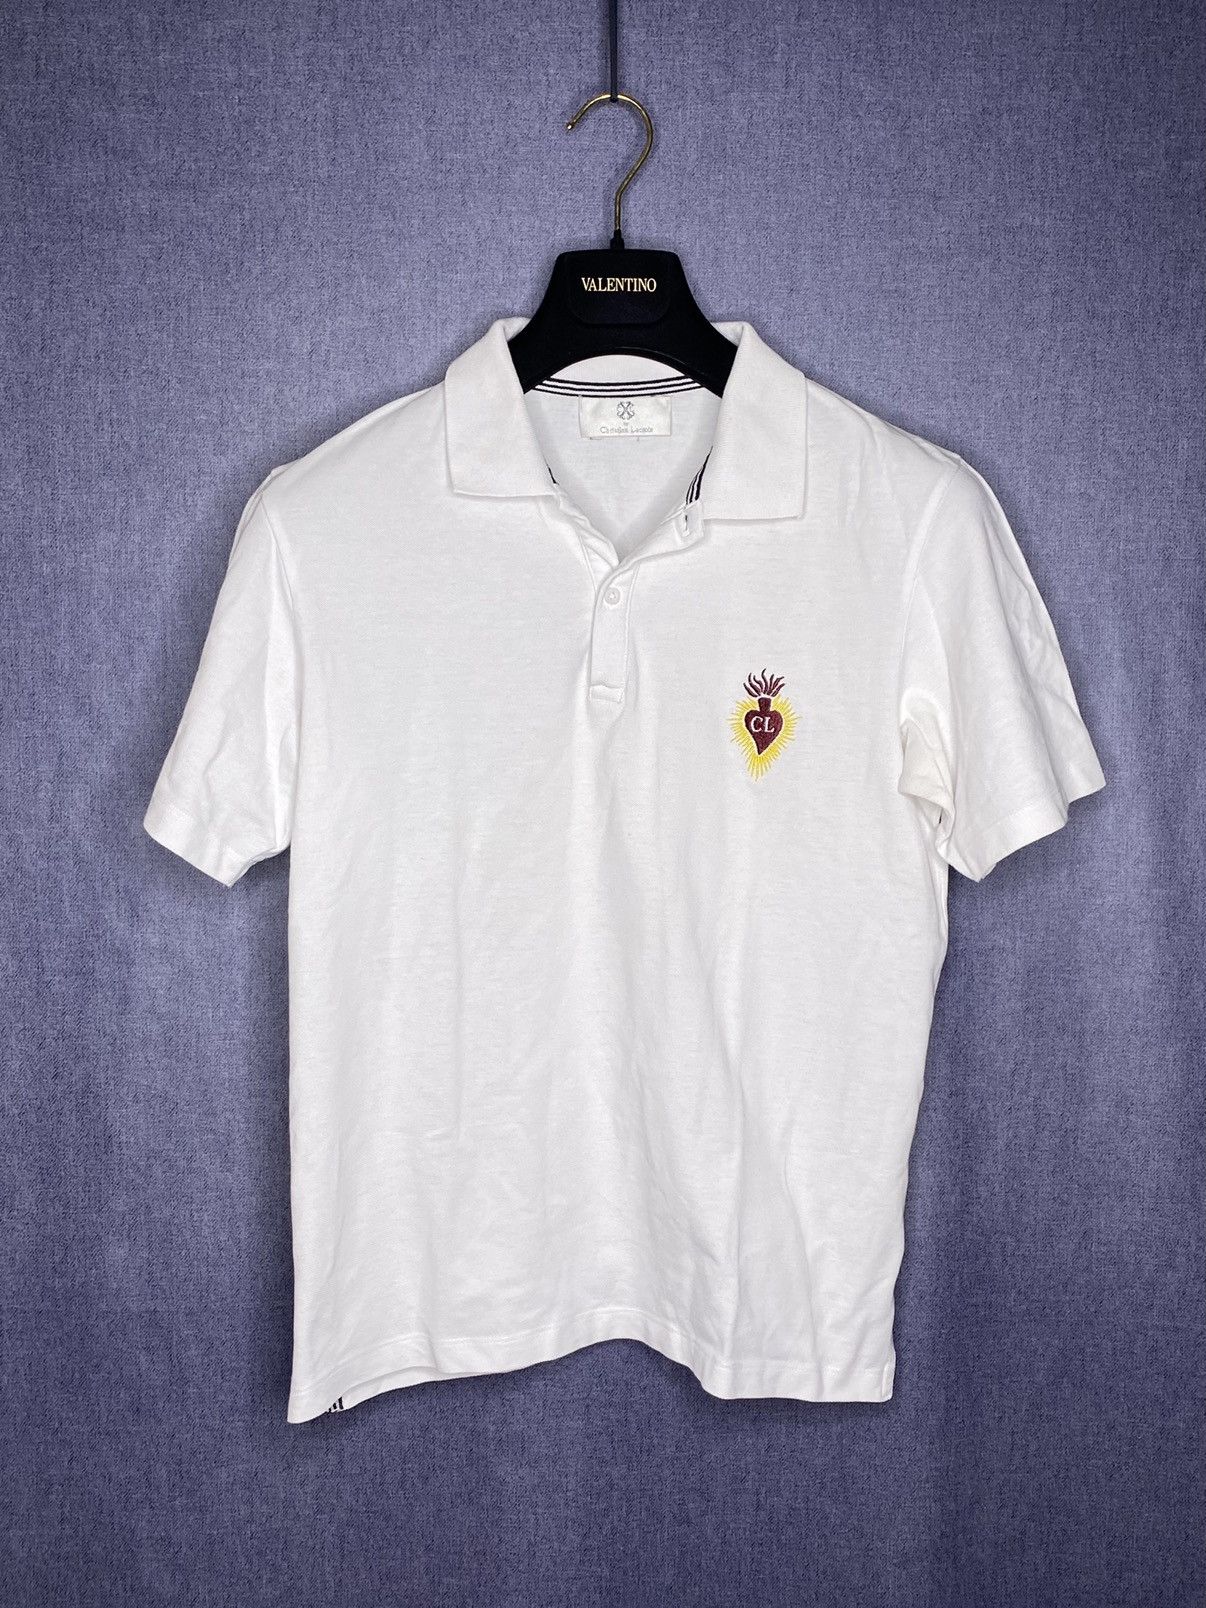 Vintage Christian Lacroix polo shirt | Grailed